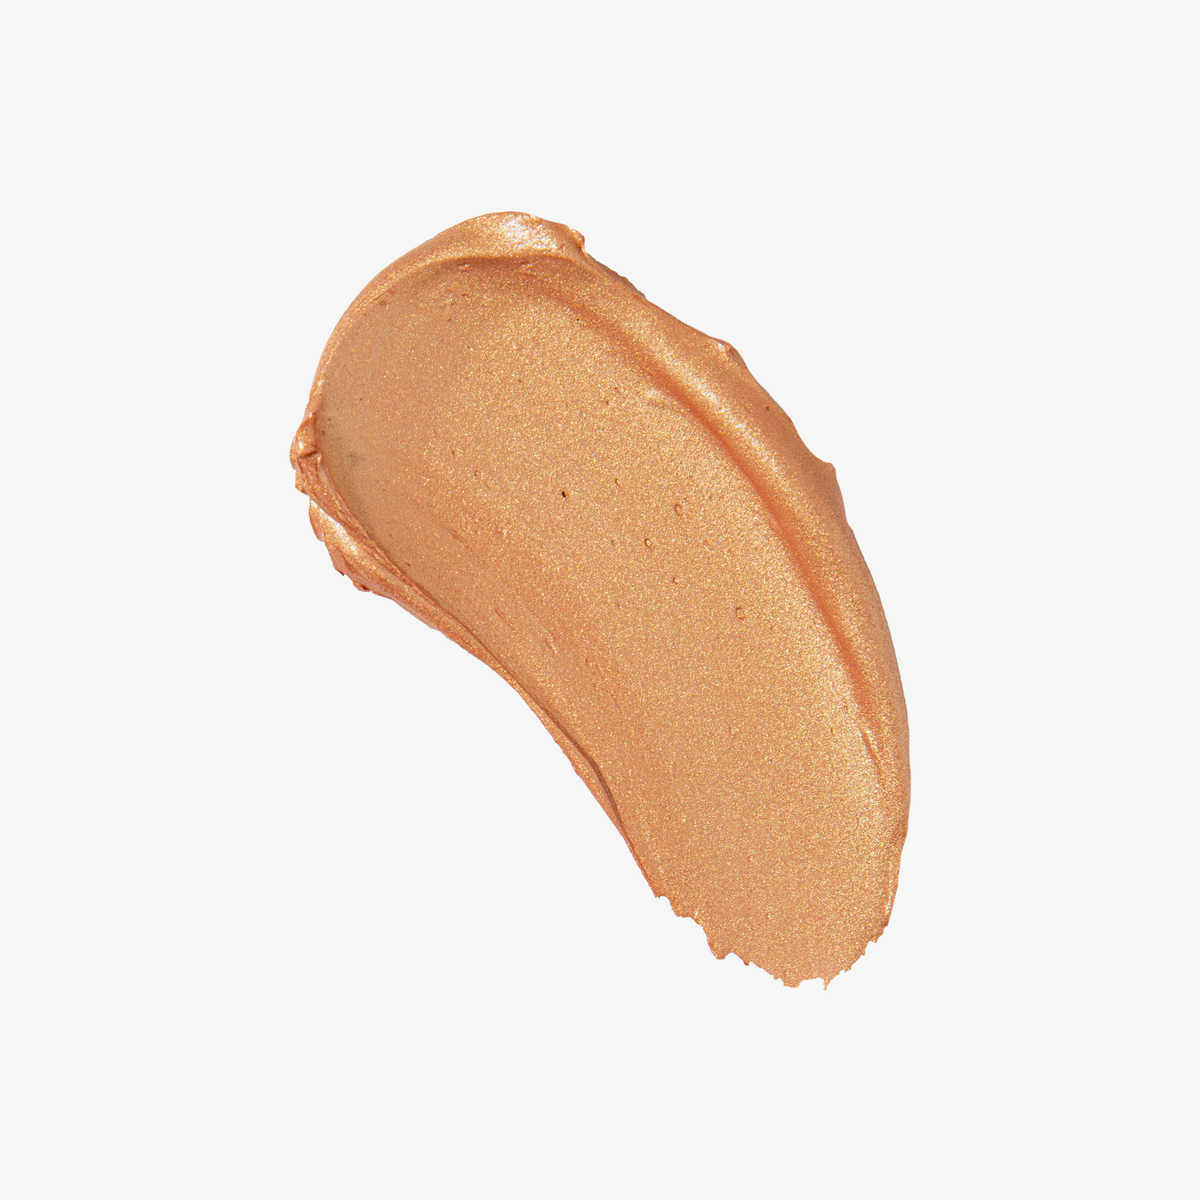 Dominique Cosmetics - Glossed Peach Skin Gloss Highlighter & Luminizer